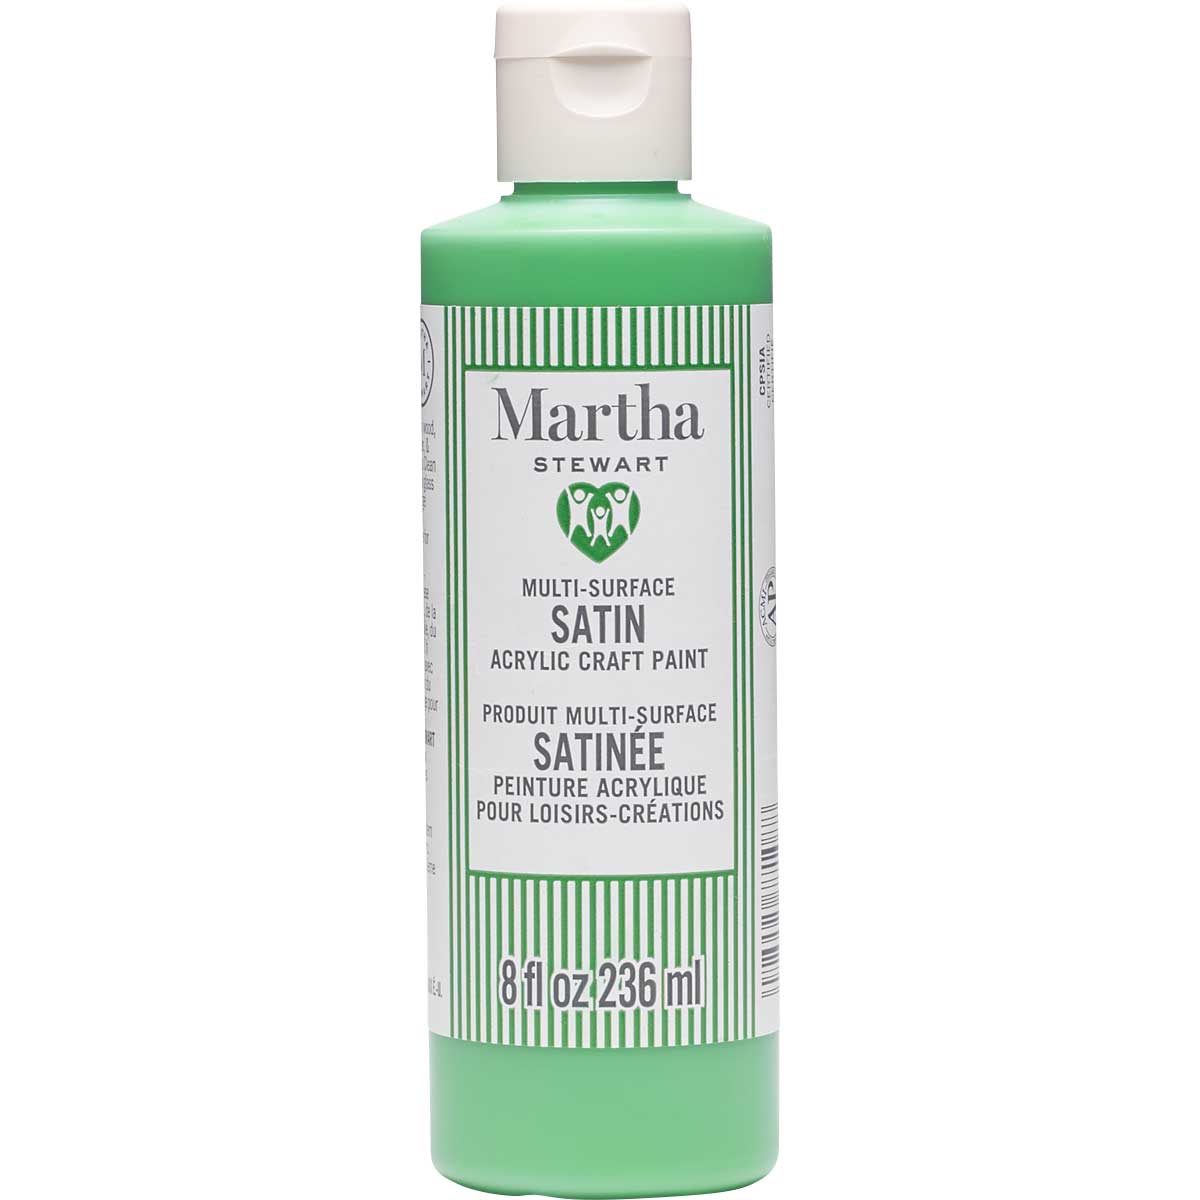 Martha Stewart ® Multi-Surface Satin Acrylic Craft Paint CPSIA - Swing Set Green, 8 oz. - 77108